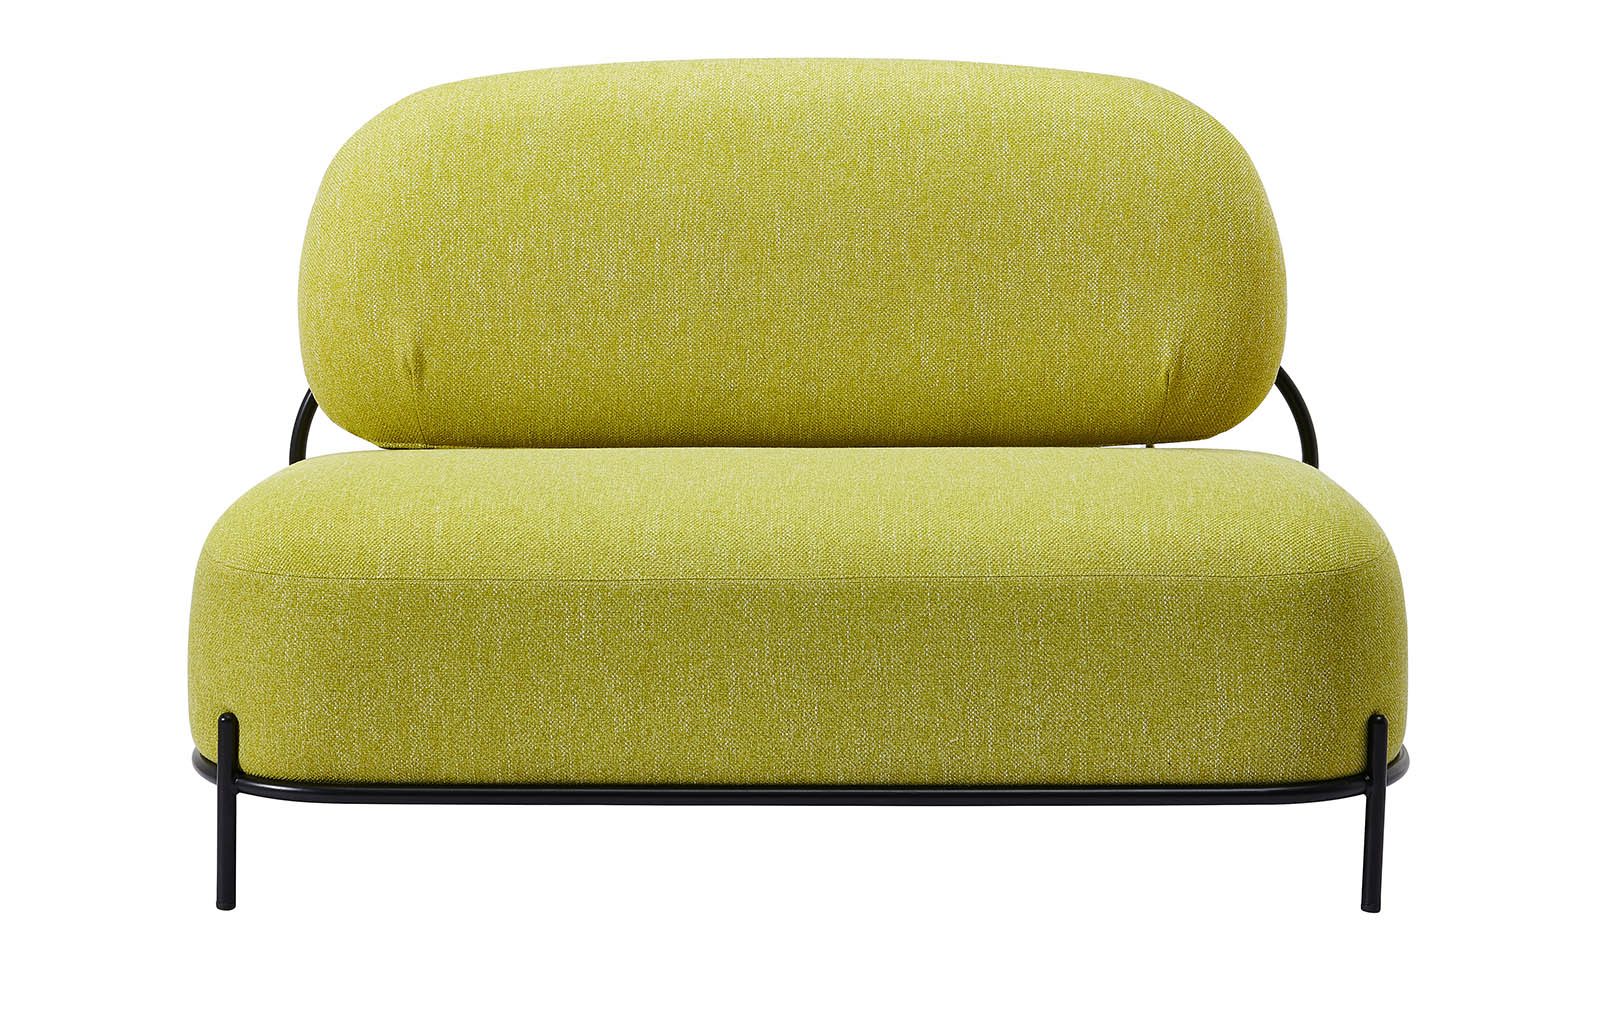 Диван sofa 06-02 (2-х местный) желтый a652-21 (esf) желтый 124.5x77.5x71.5 см.